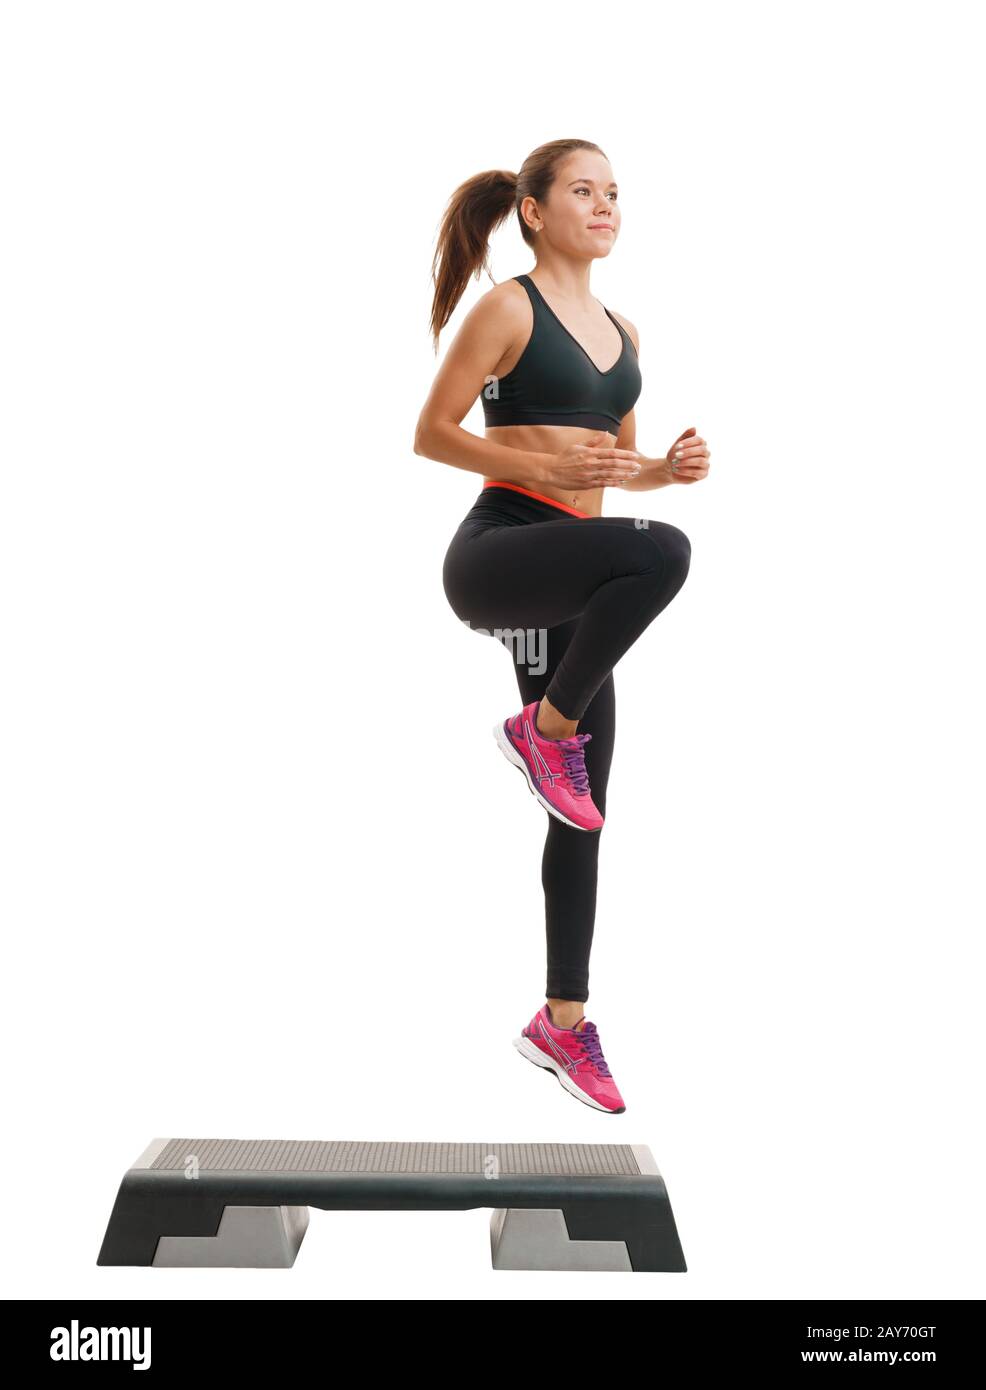 Fit woman in sportswear at step-aerobics class Stock Photo - Alamy